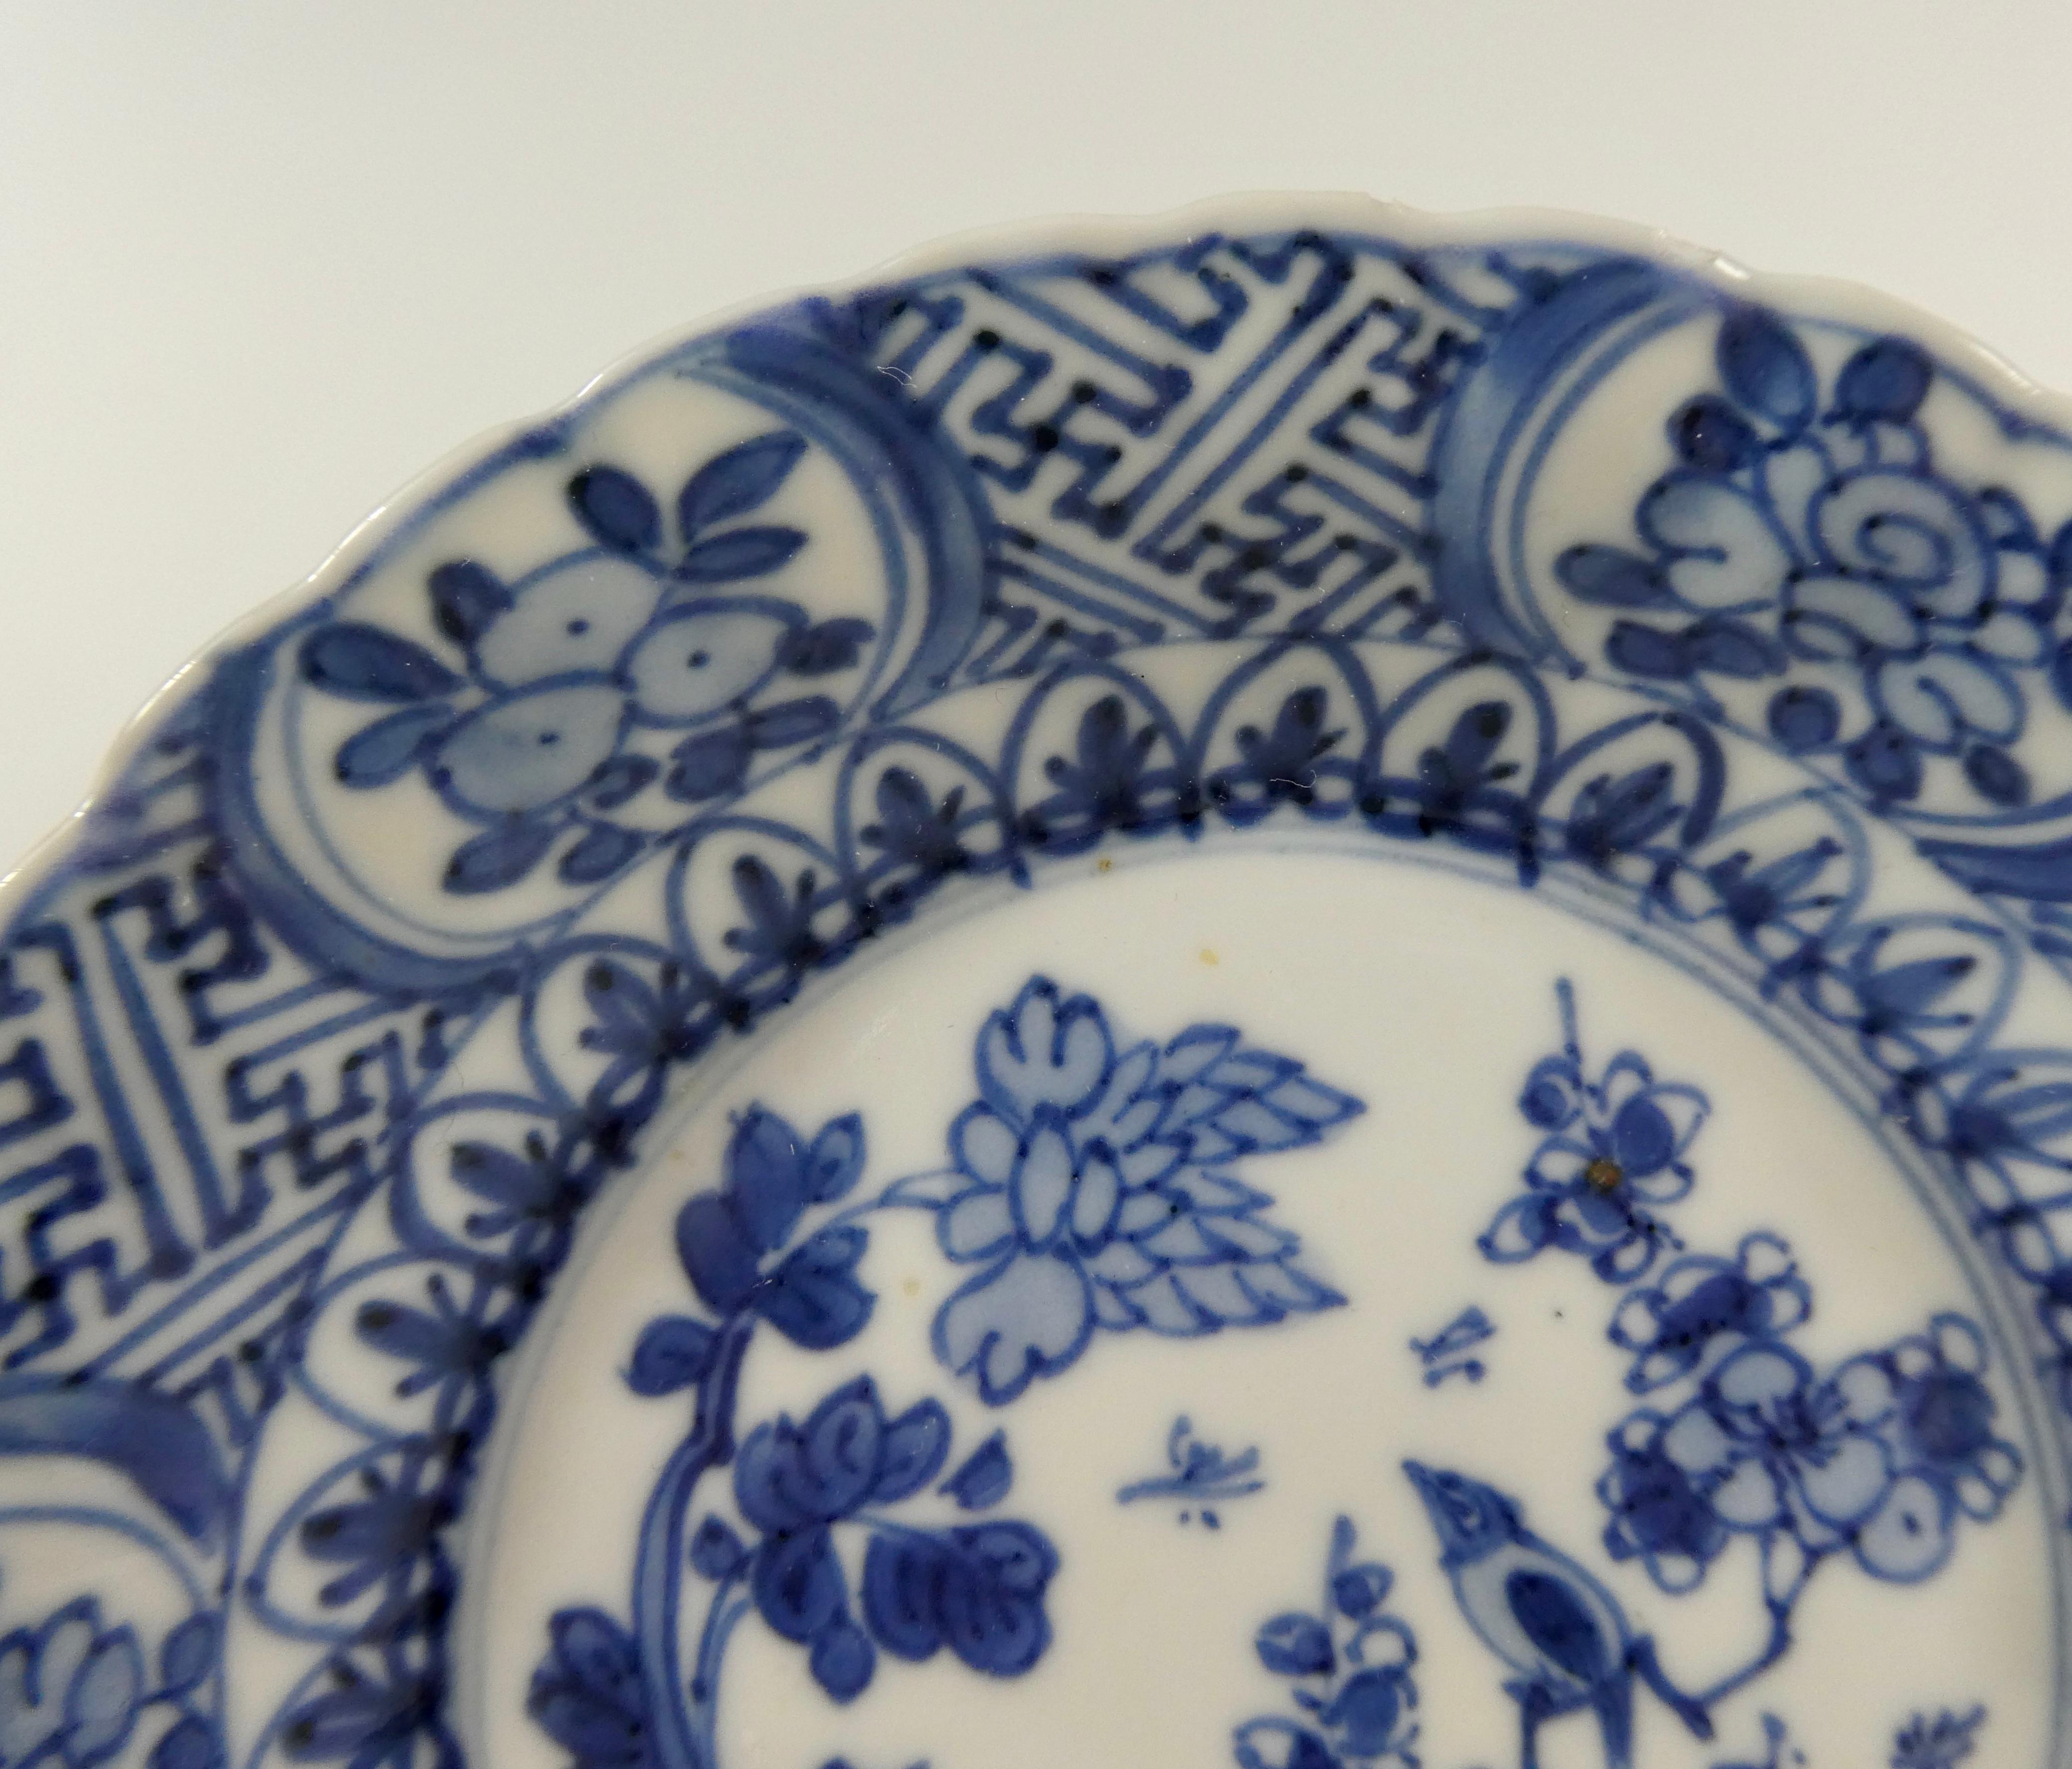 Fired Chinese Porcelain Dish, Kangxi Period 1662-1722